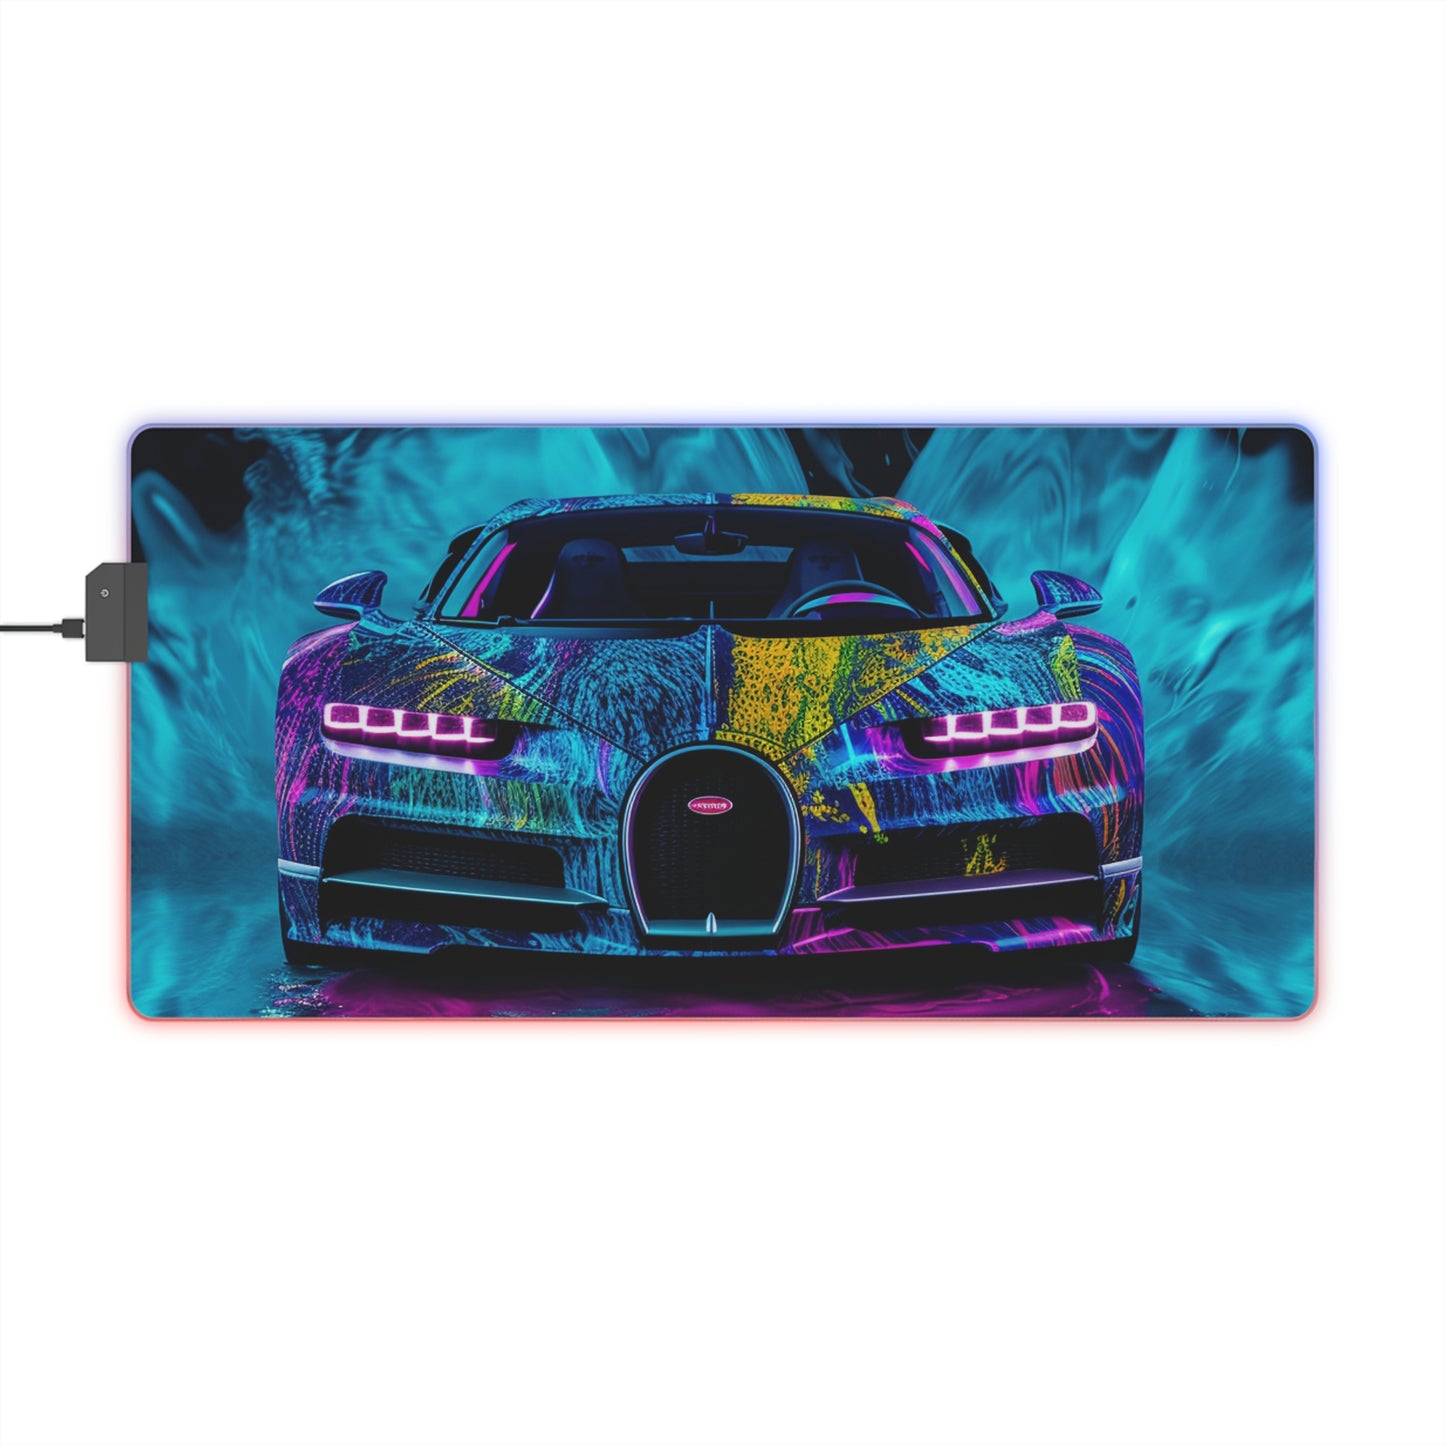 LED Gaming Mouse Pad Bugatti Water 2